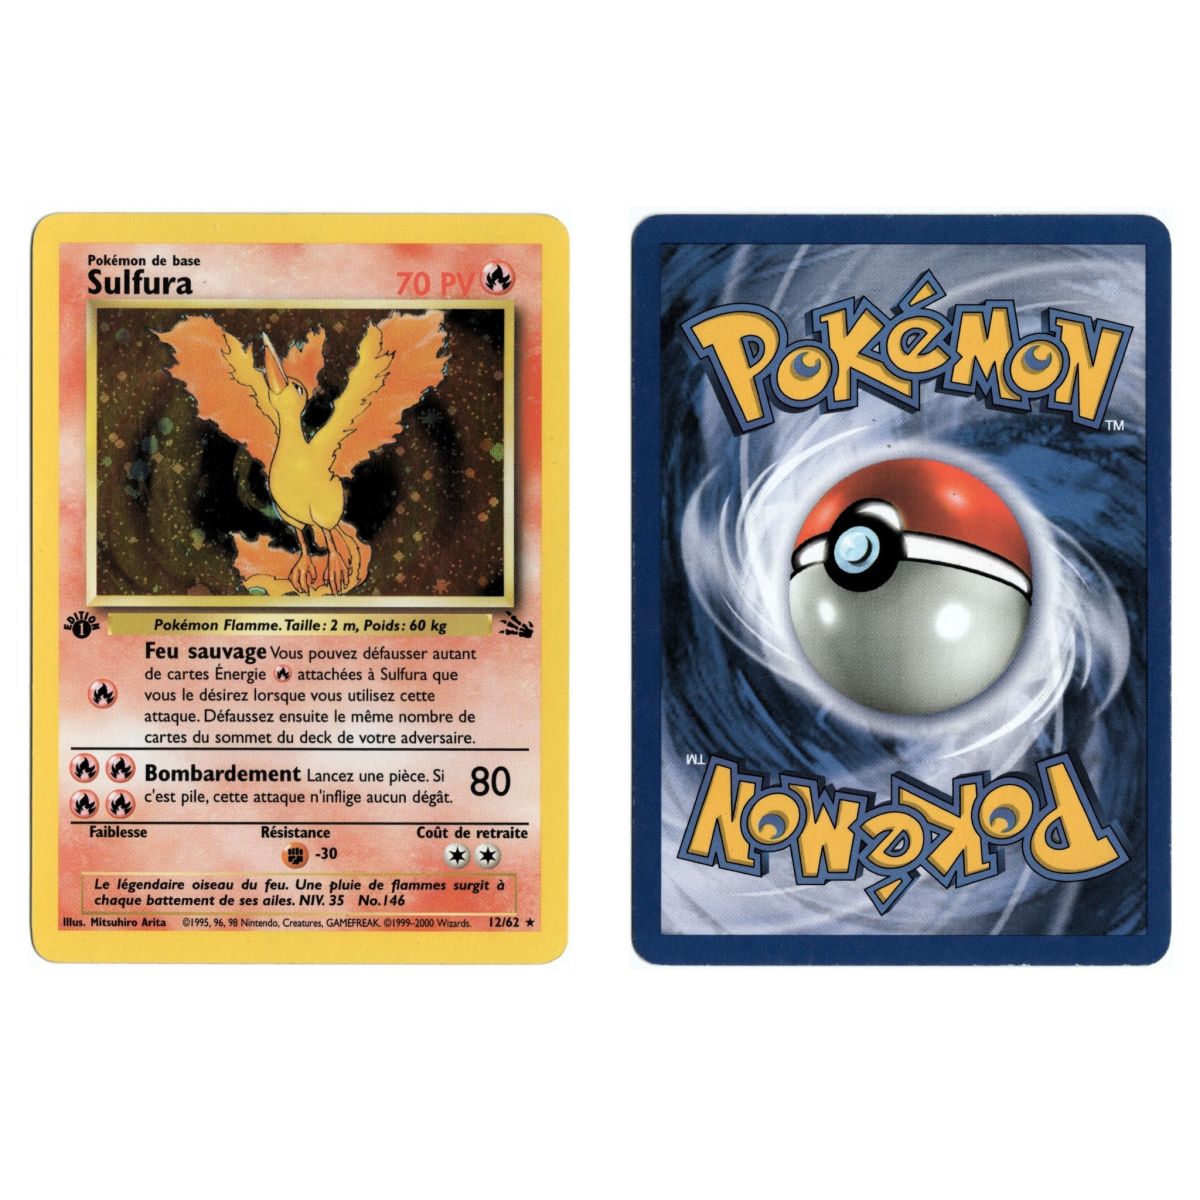 MOLTRES 12/62 Fossil Set Holo Pokemon Card Exc / 